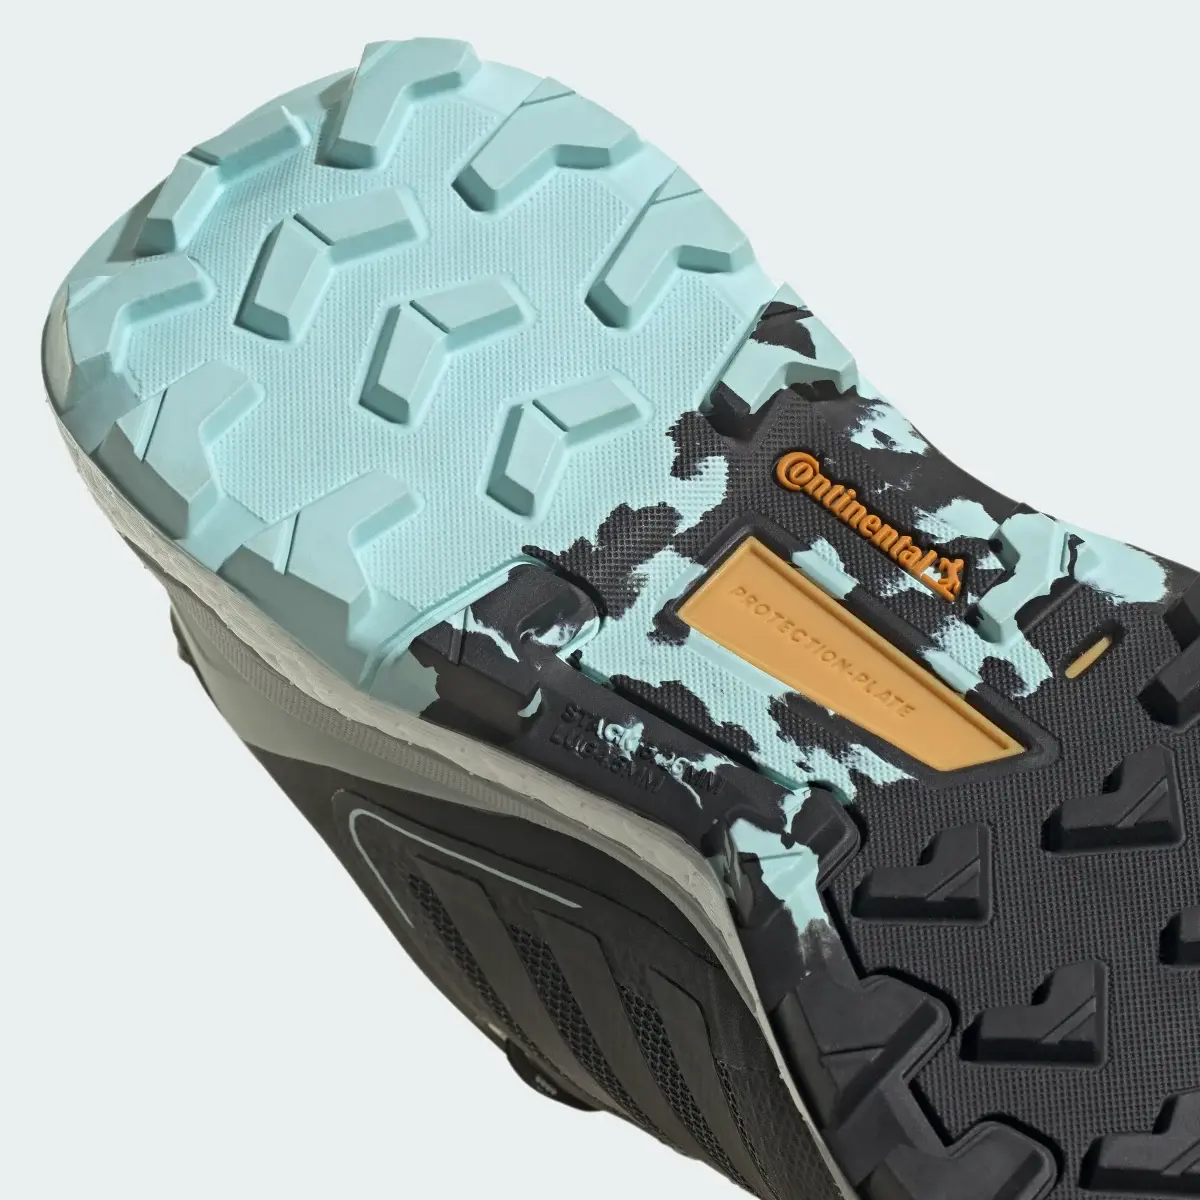 Adidas Sapatilhas de Caminhada GORE-TEX Skychaser 2.0 TERREX. 3